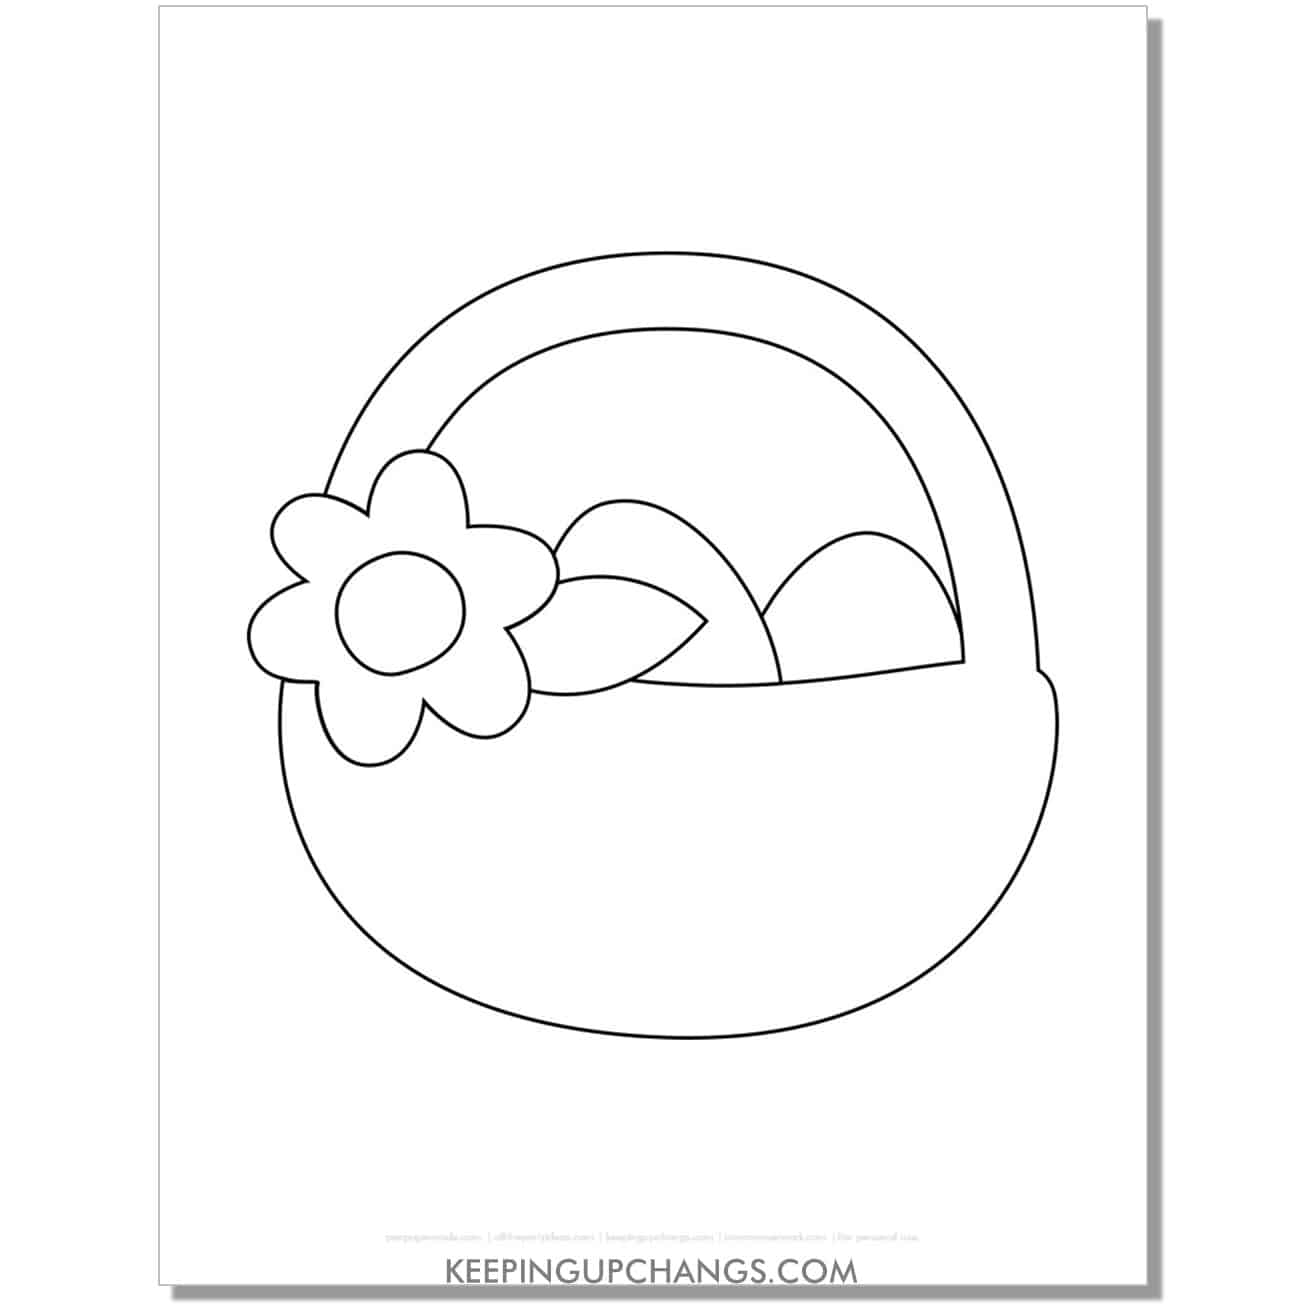 Easter basket with flower and egg outline for preschool, kindergarten coloring page, sheet.